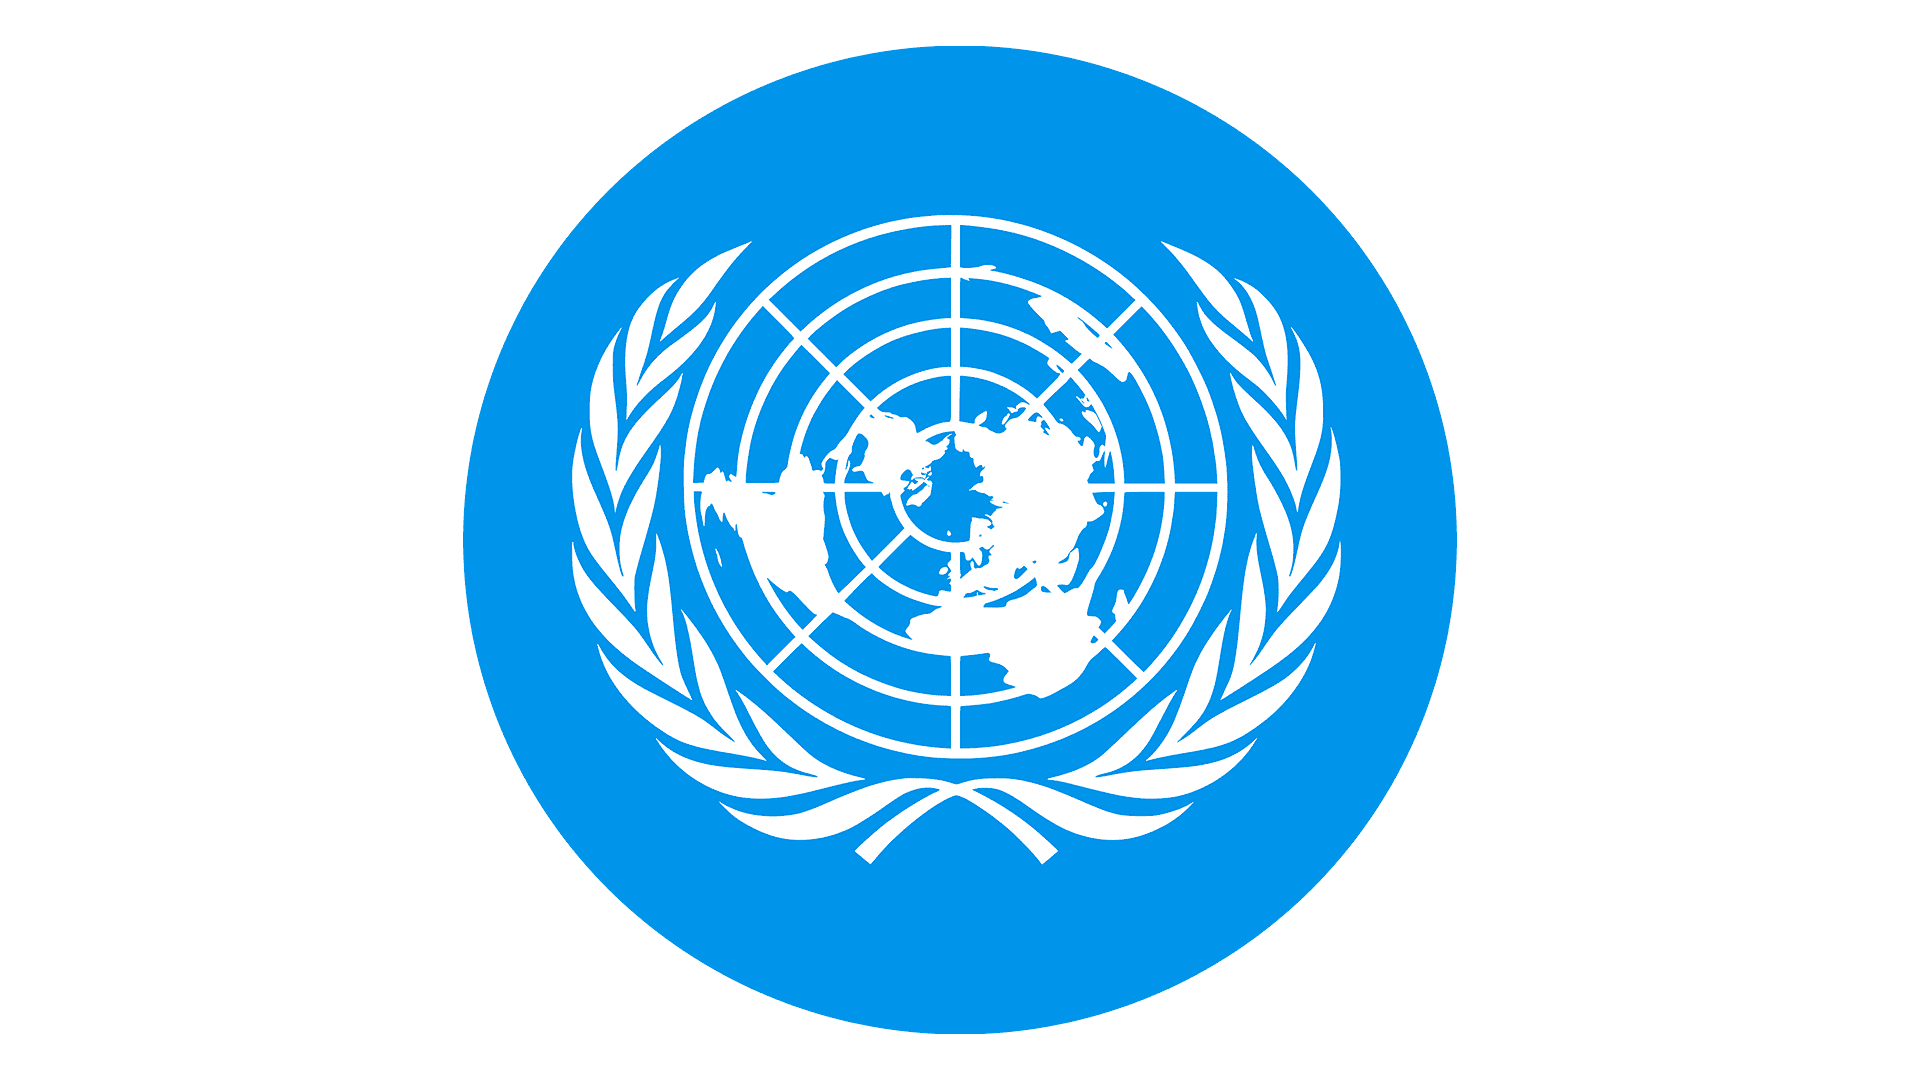 Организация Объединённых наций ООН эмблема. Совет безопасности ООН эмблема. Ассамблея ООН логотип. Совет безопасности ООН эмблема без фона. Оон 44